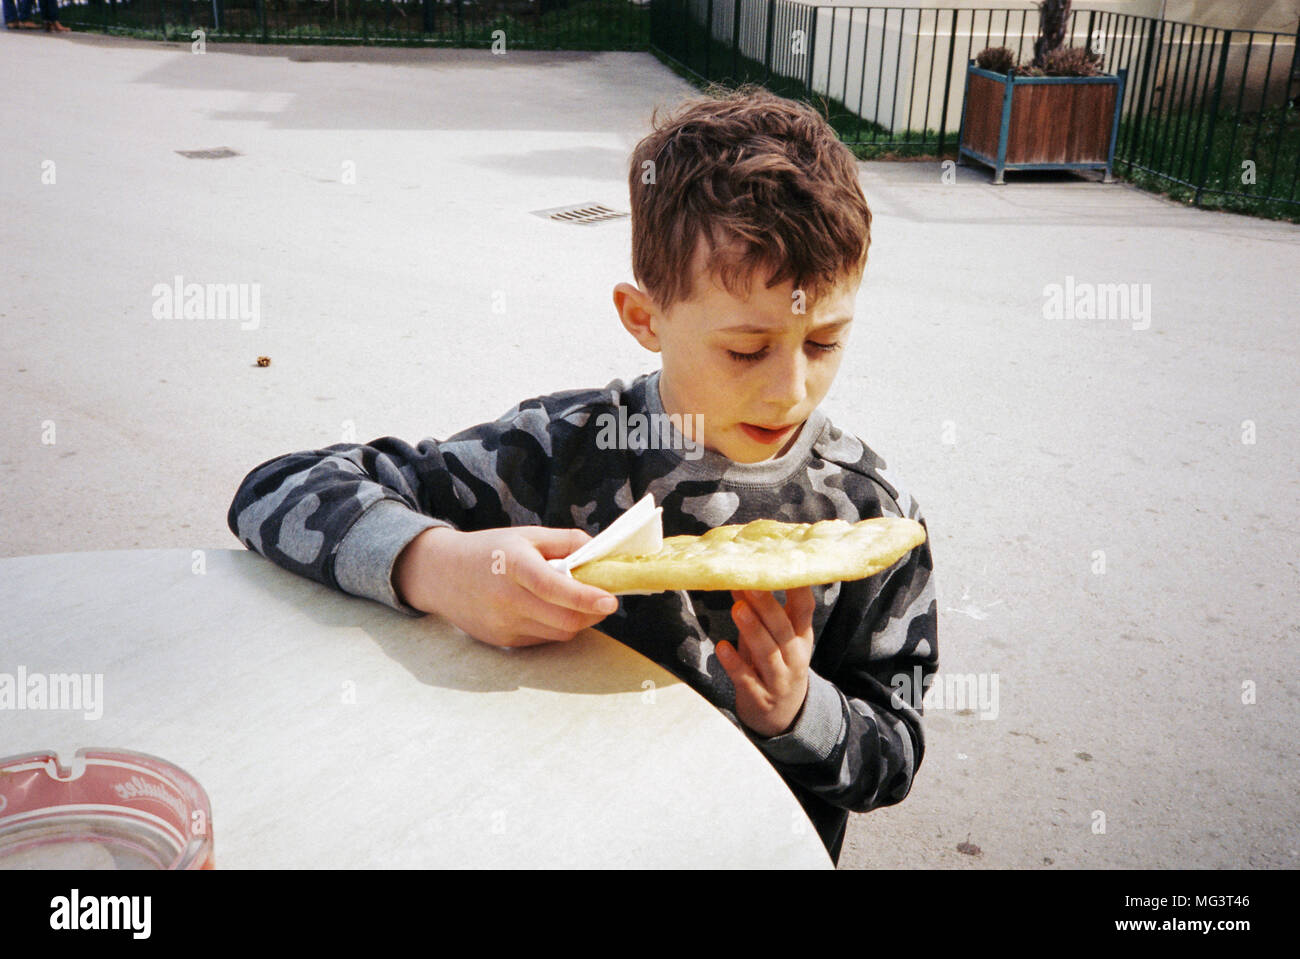 Garçon de huit ans de manger un Lángos, un pain plat frit.Zoo de Schönbrunn, Maxingstraße, Vienne, Autriche, Europe. Banque D'Images